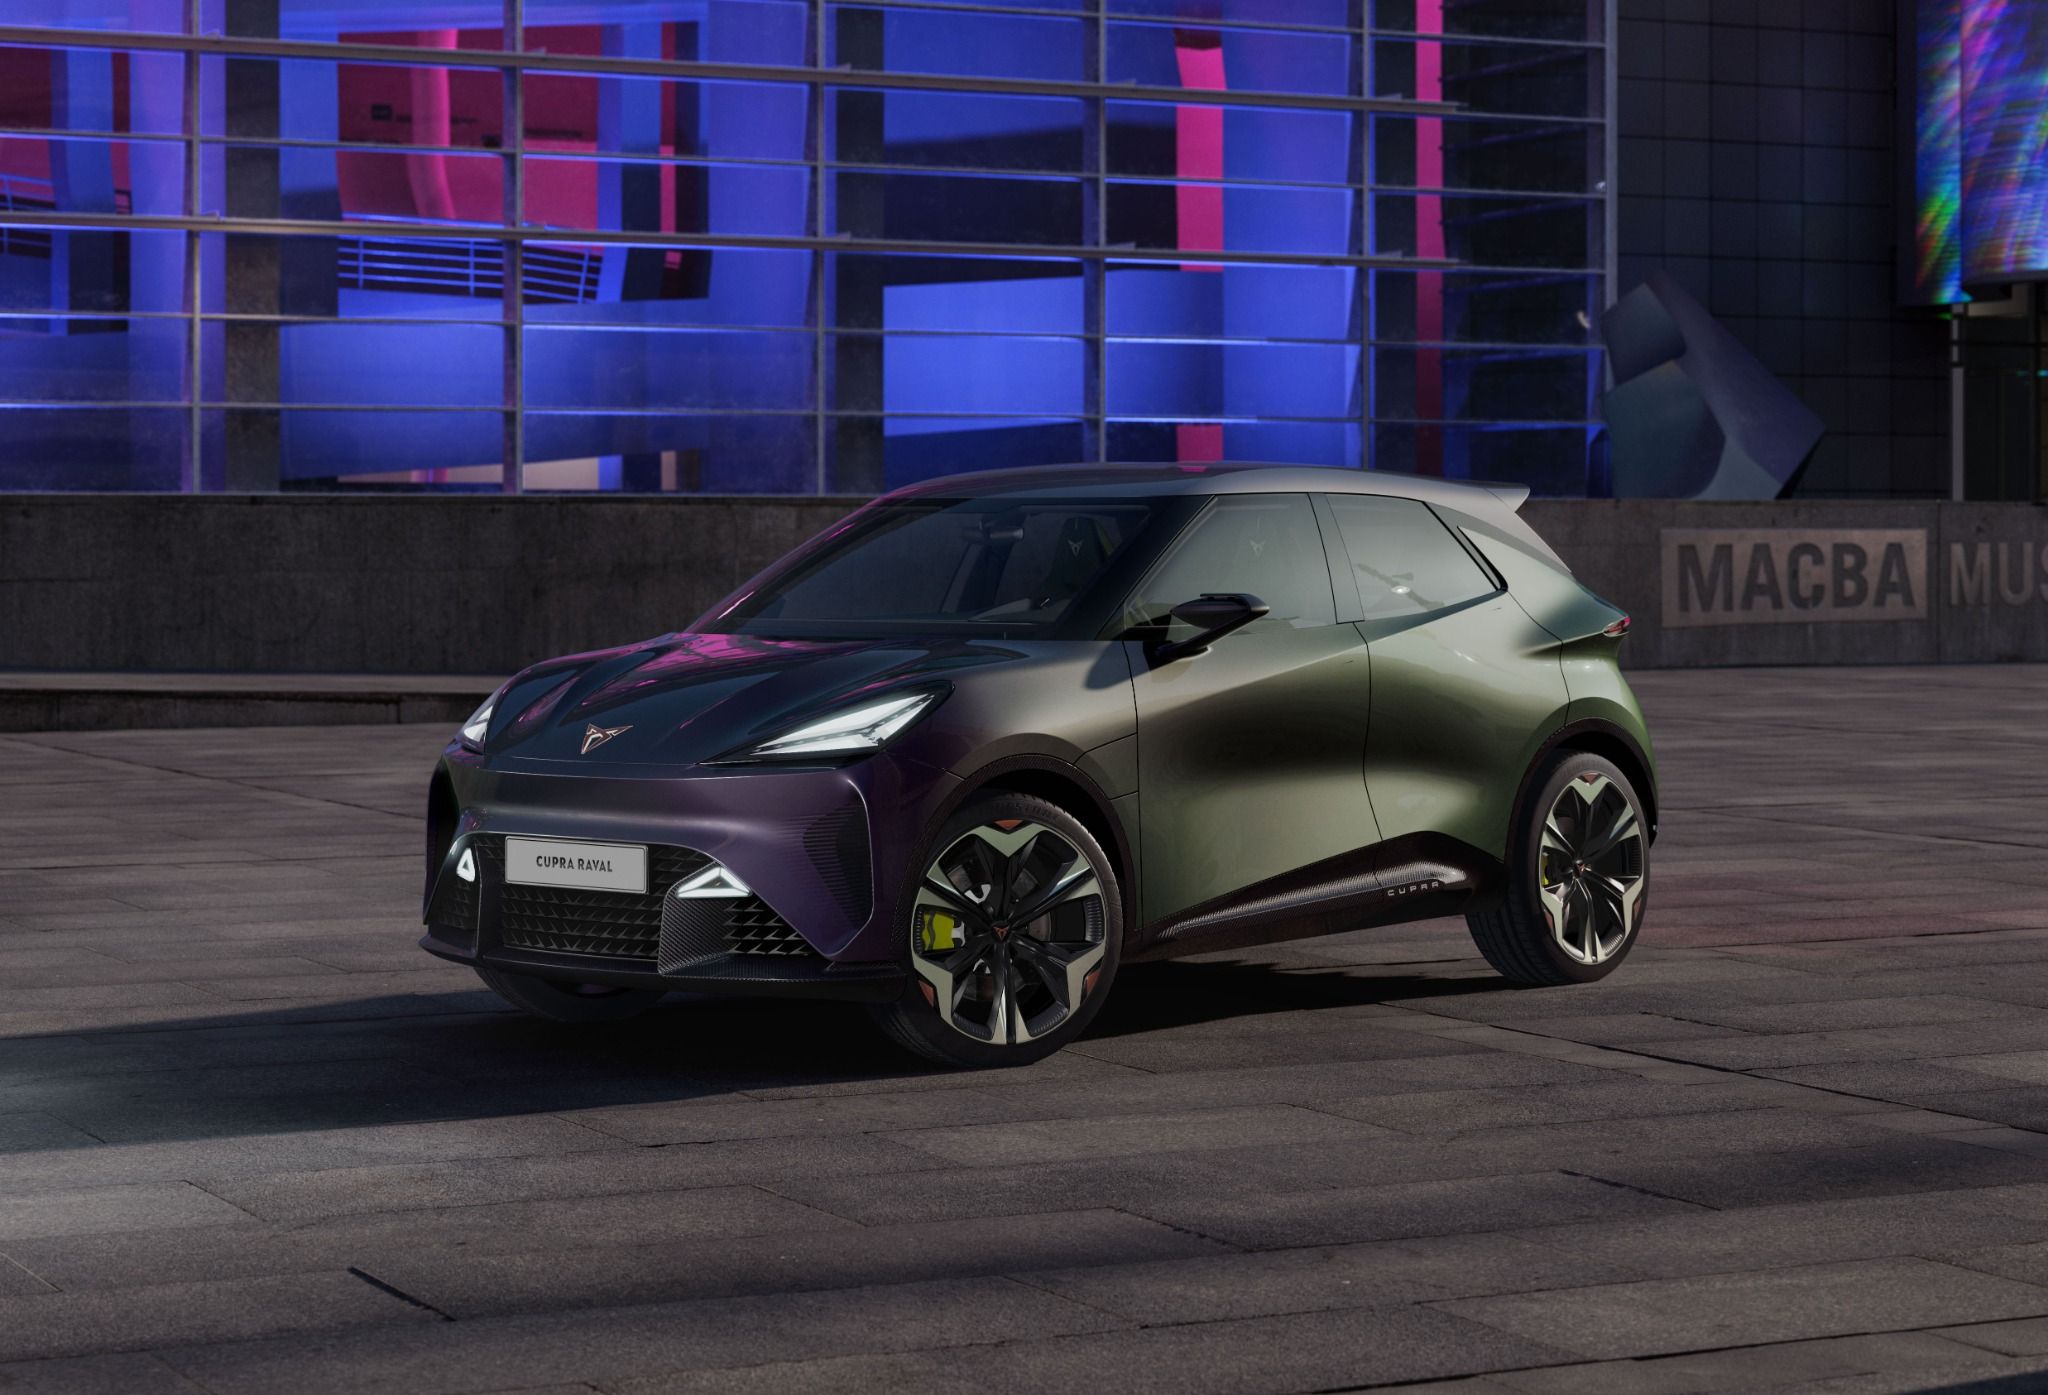 The CUPRA Tavascan concept car becomes a reality